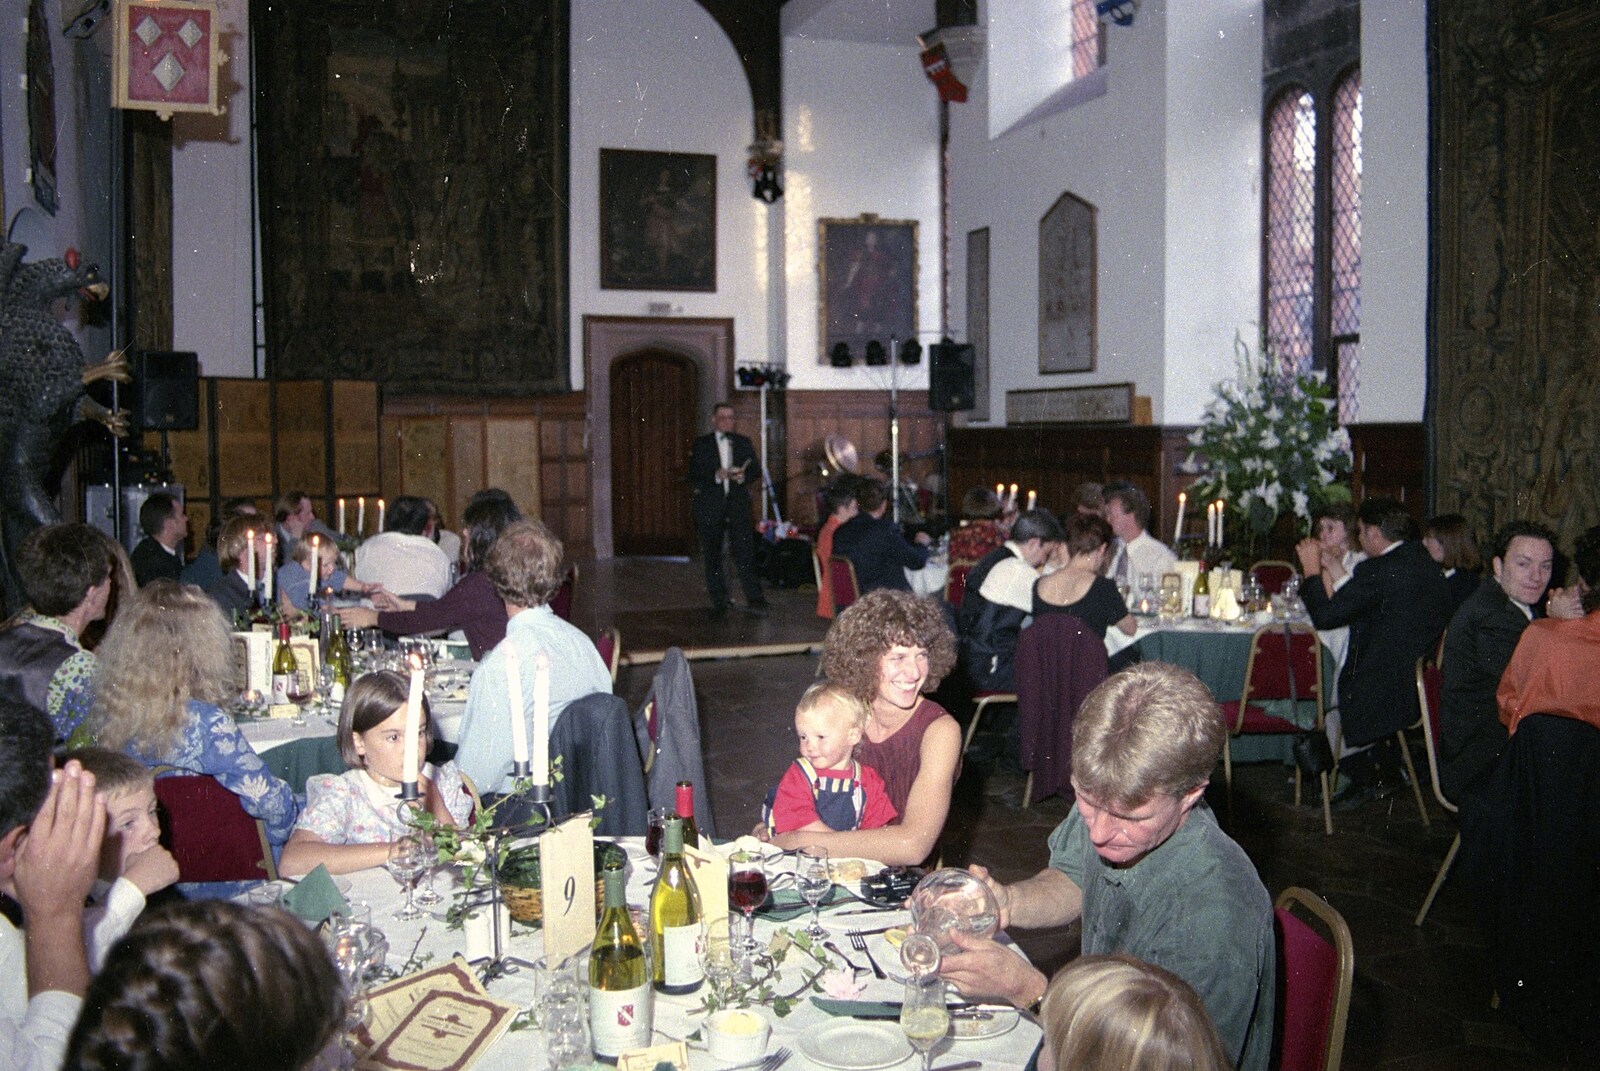 Stuart and Sarah's CISU Wedding, Naworth Castle, Brampton, Cumbria - 21st September 1996: Time for lunch